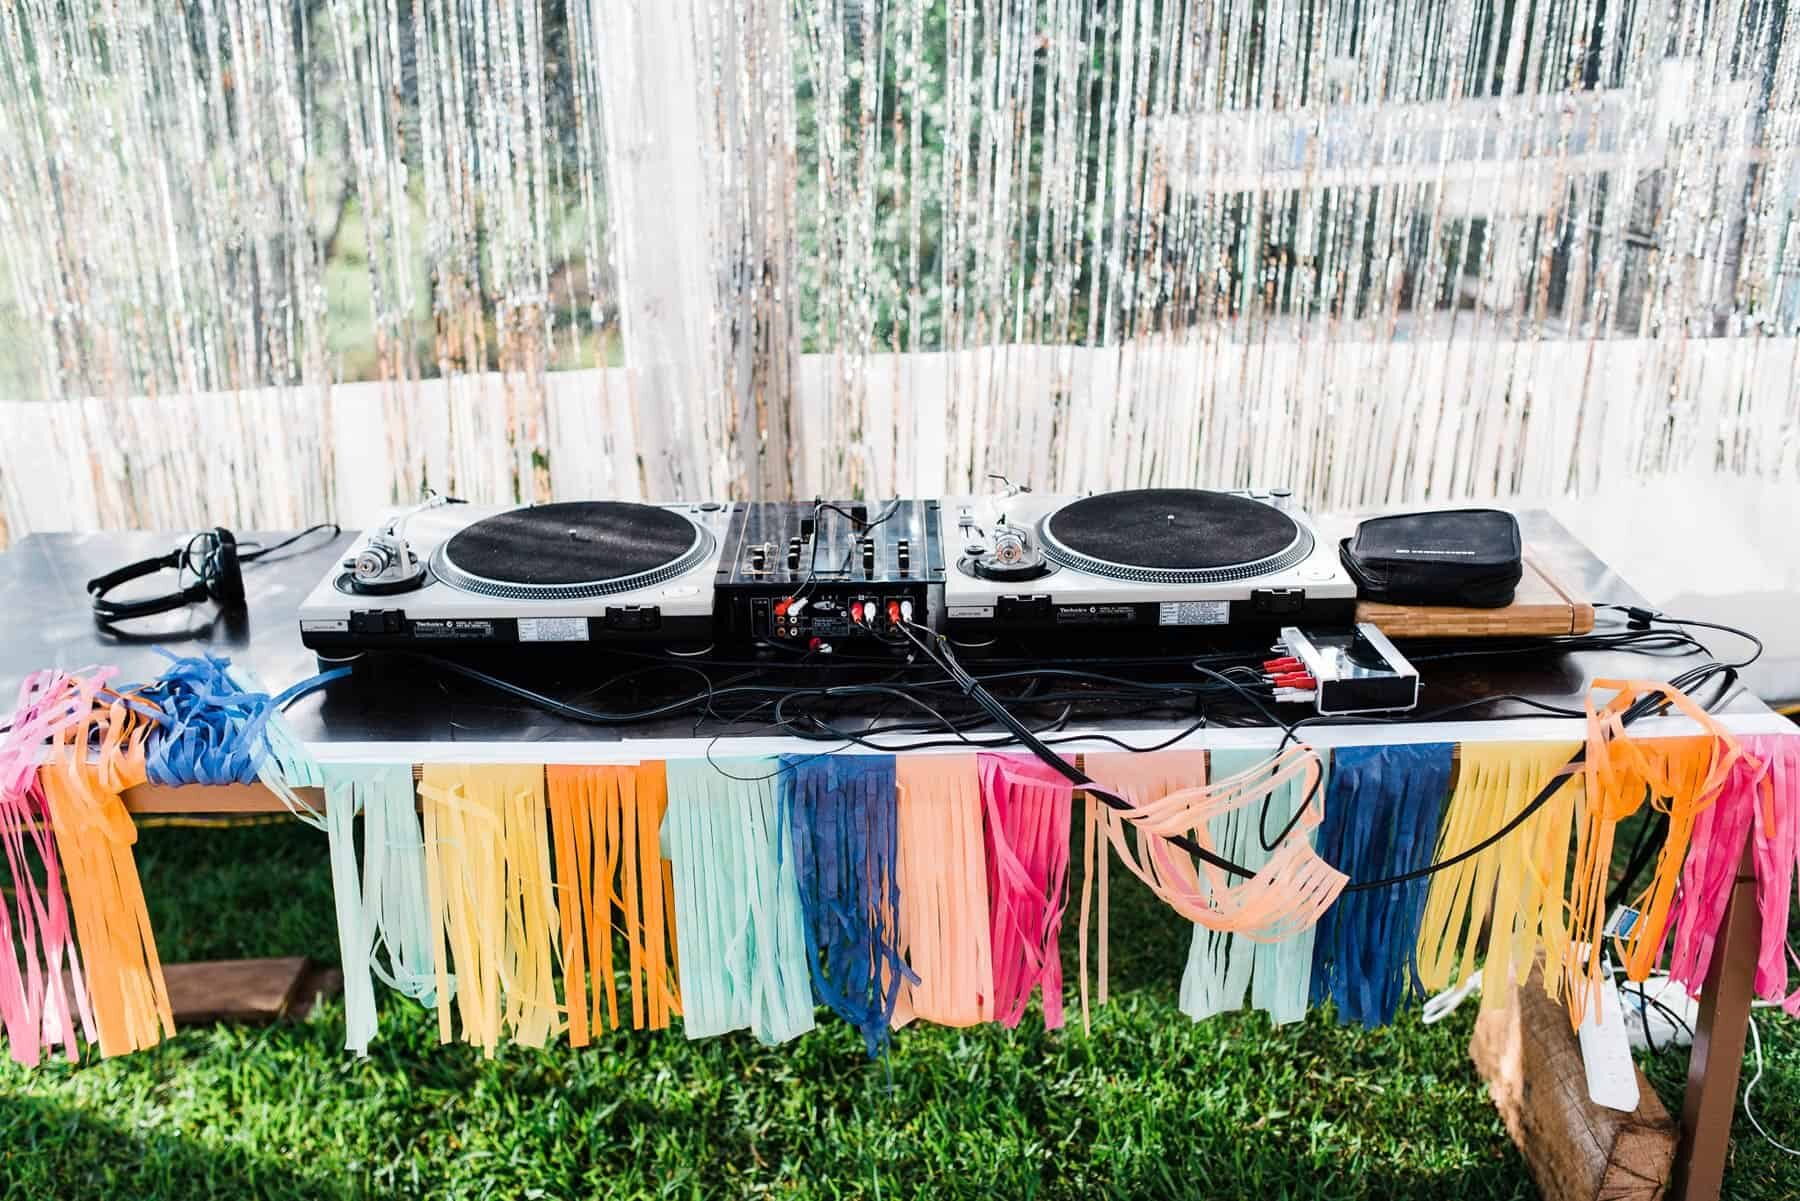 DJ decks with colourful fringe tassels